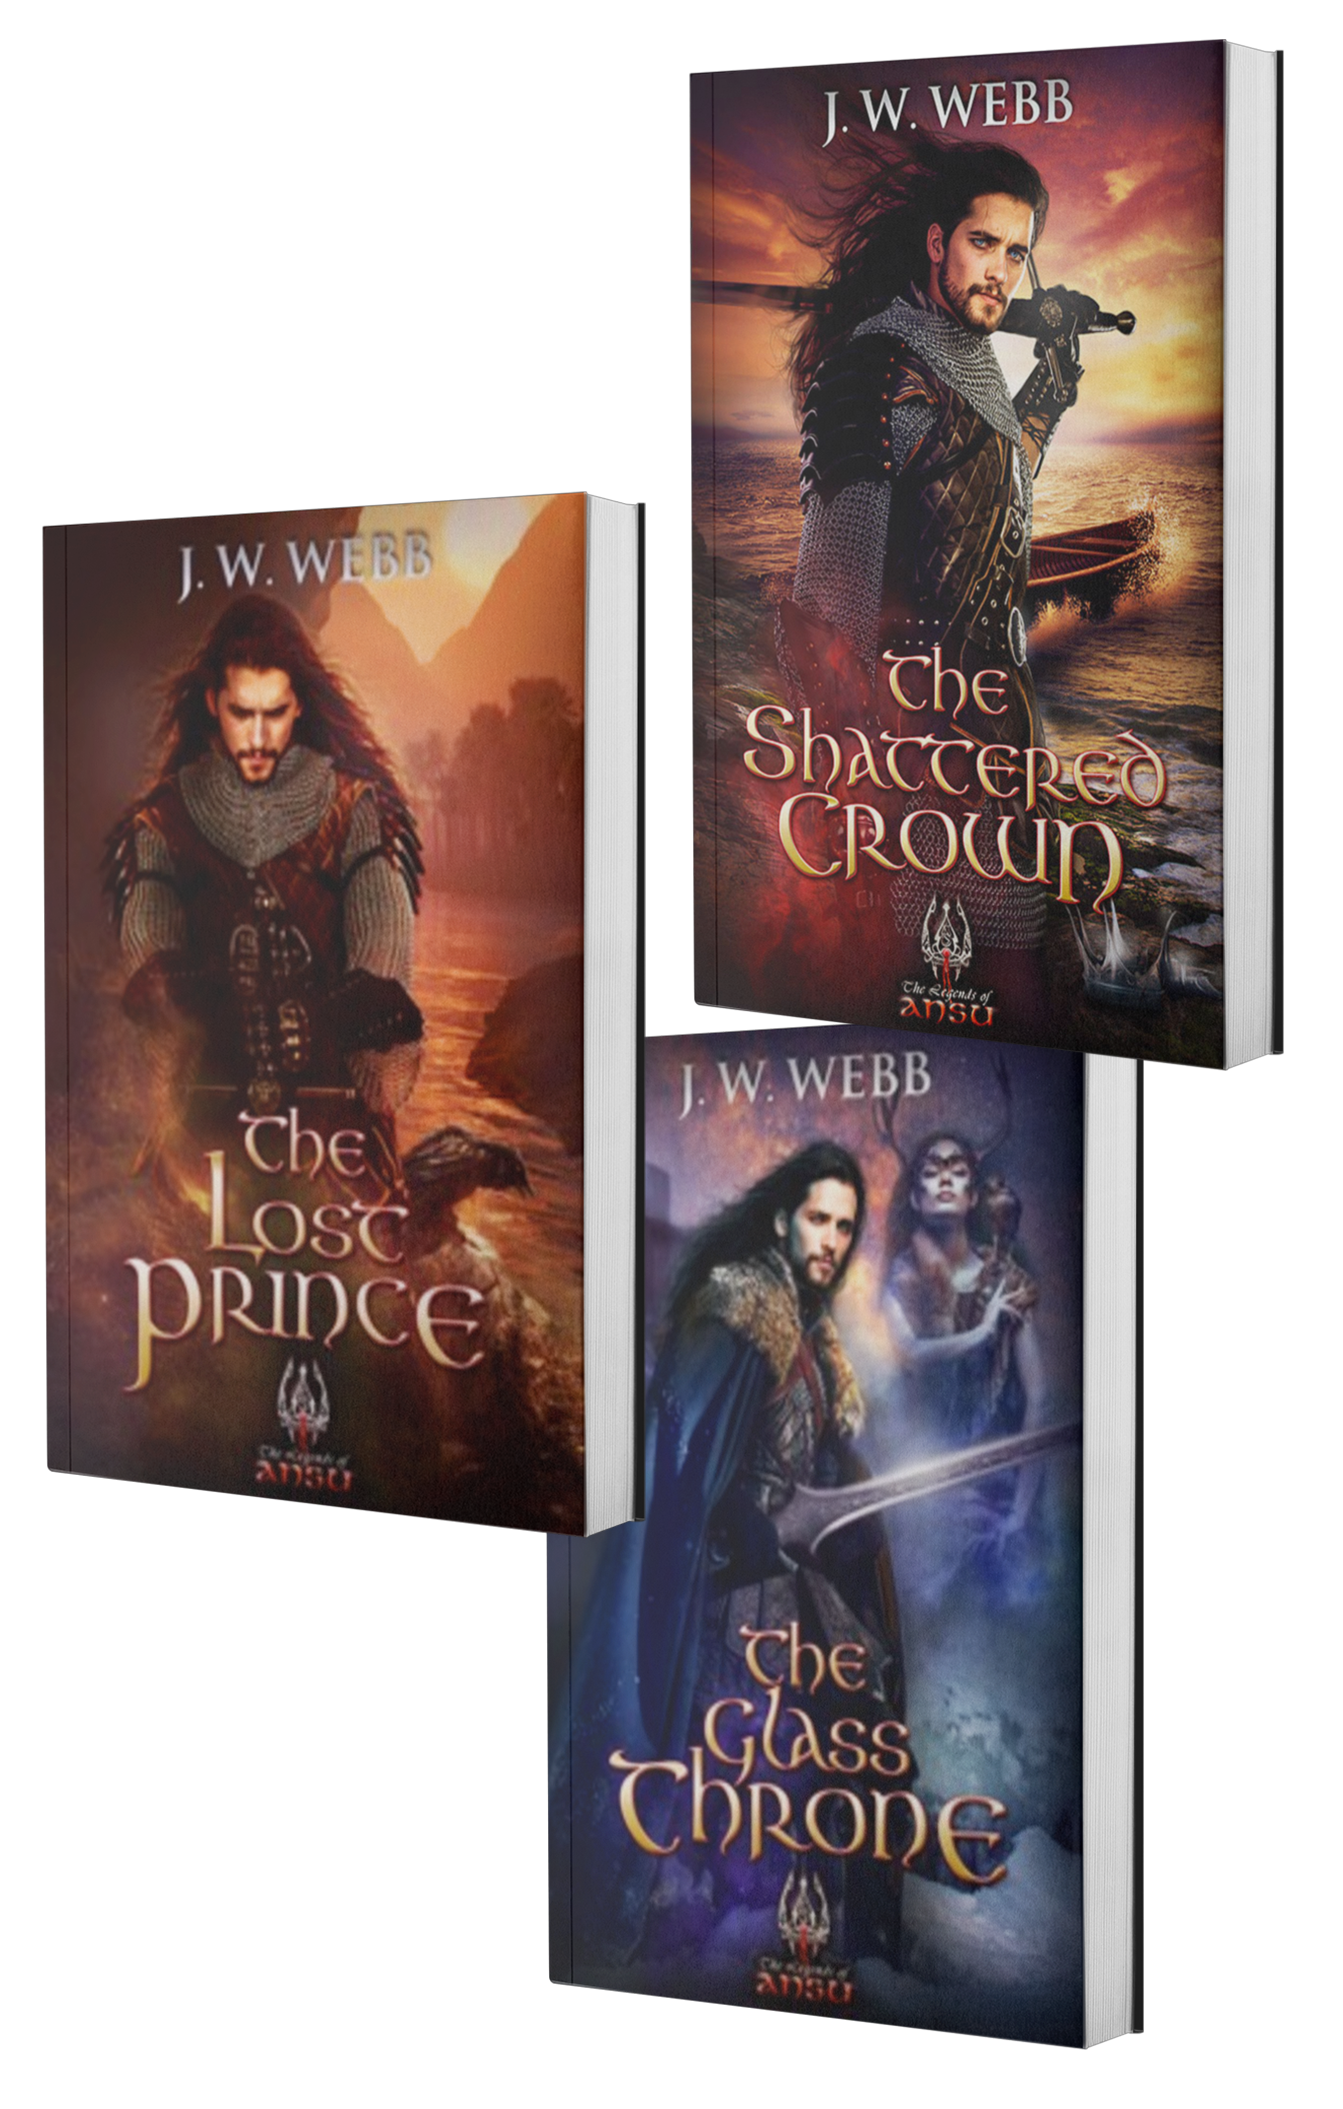 The Crystal Crown Trilogy by J.W. Webb